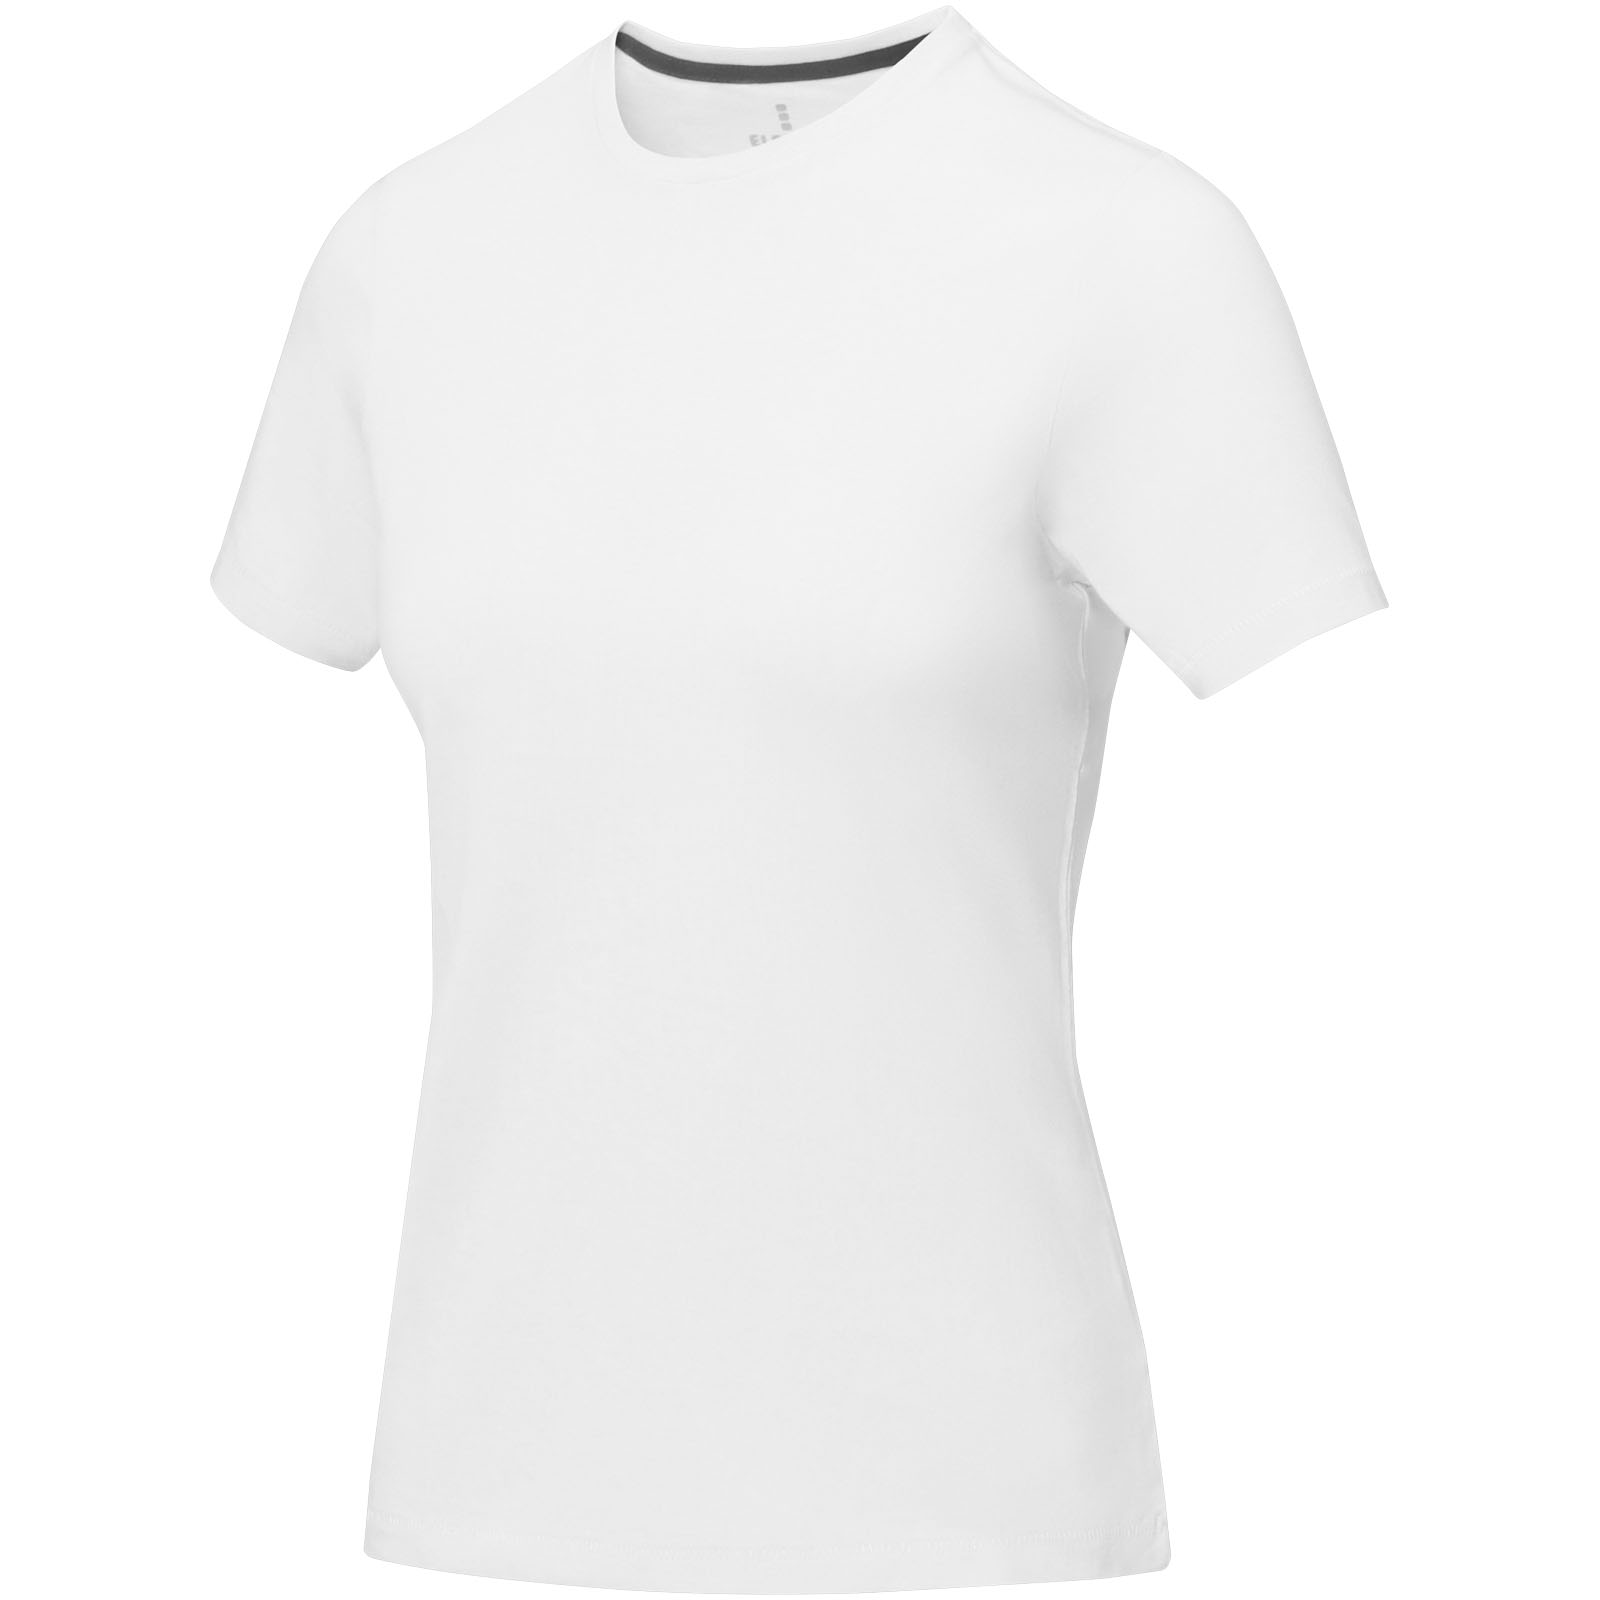 Clothing - Nanaimo short sleeve women's t-shirt